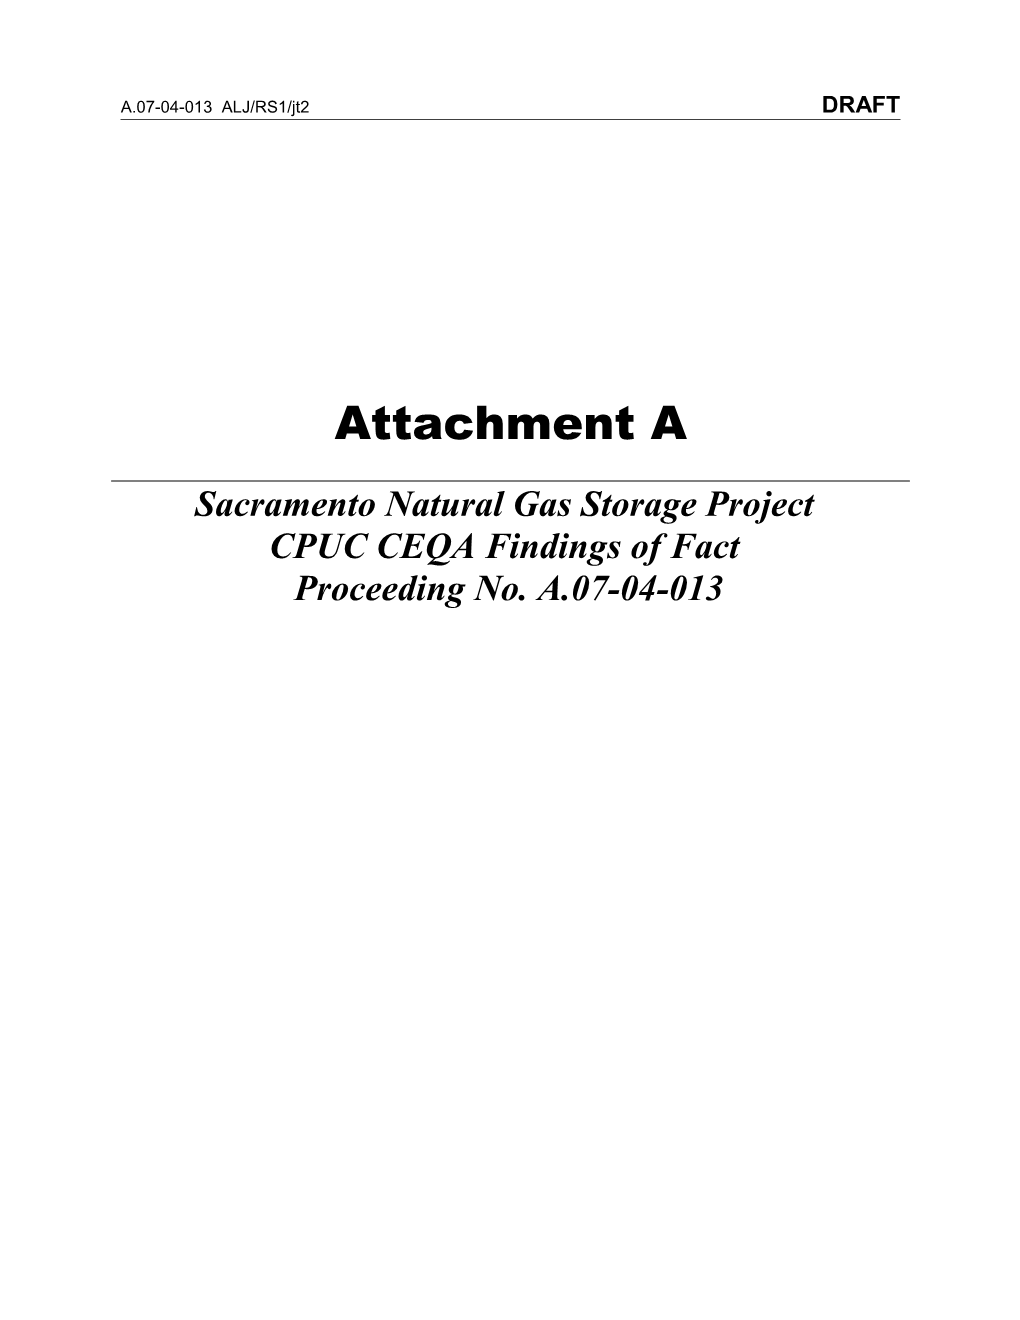 Sacramento Natural Gas Storage Project